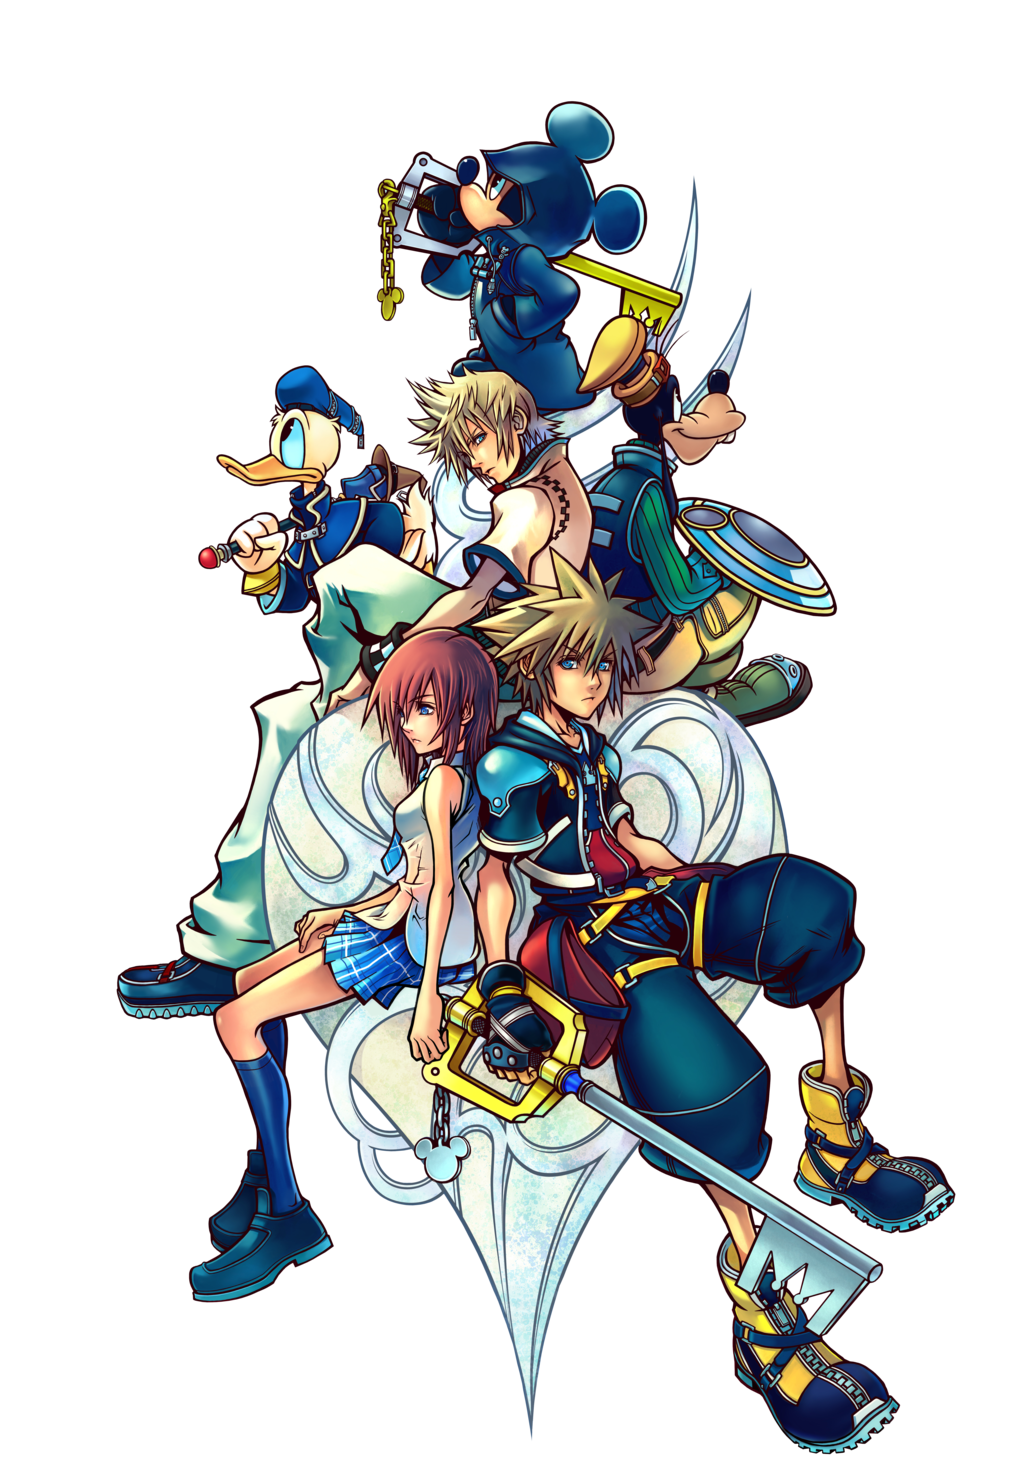 Kingdom Hearts RE: Chain of Memories